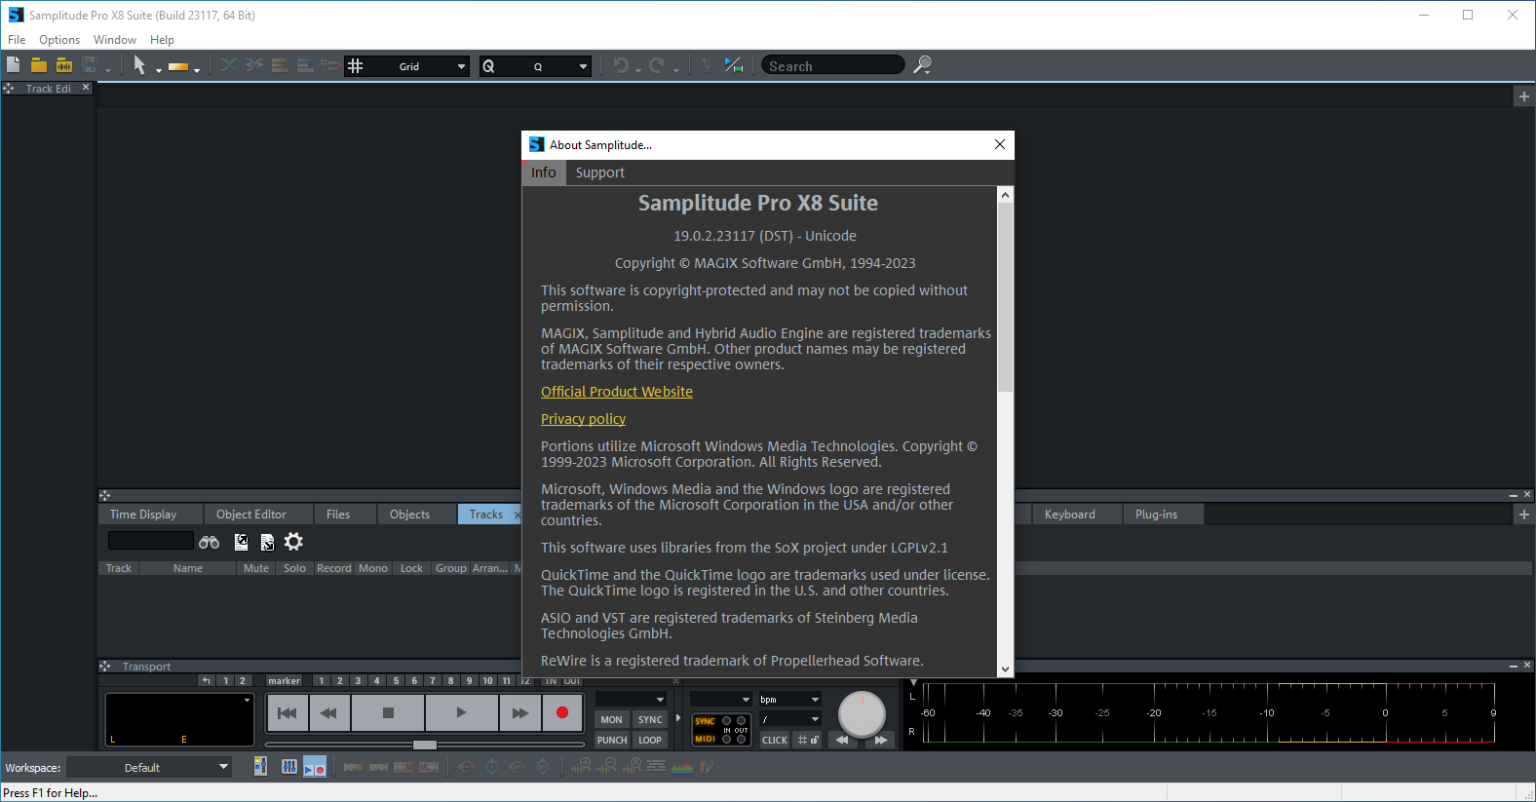 MAGIX Samplitude Pro X8 Suite 19.0.2.23117 download the last version for ipod